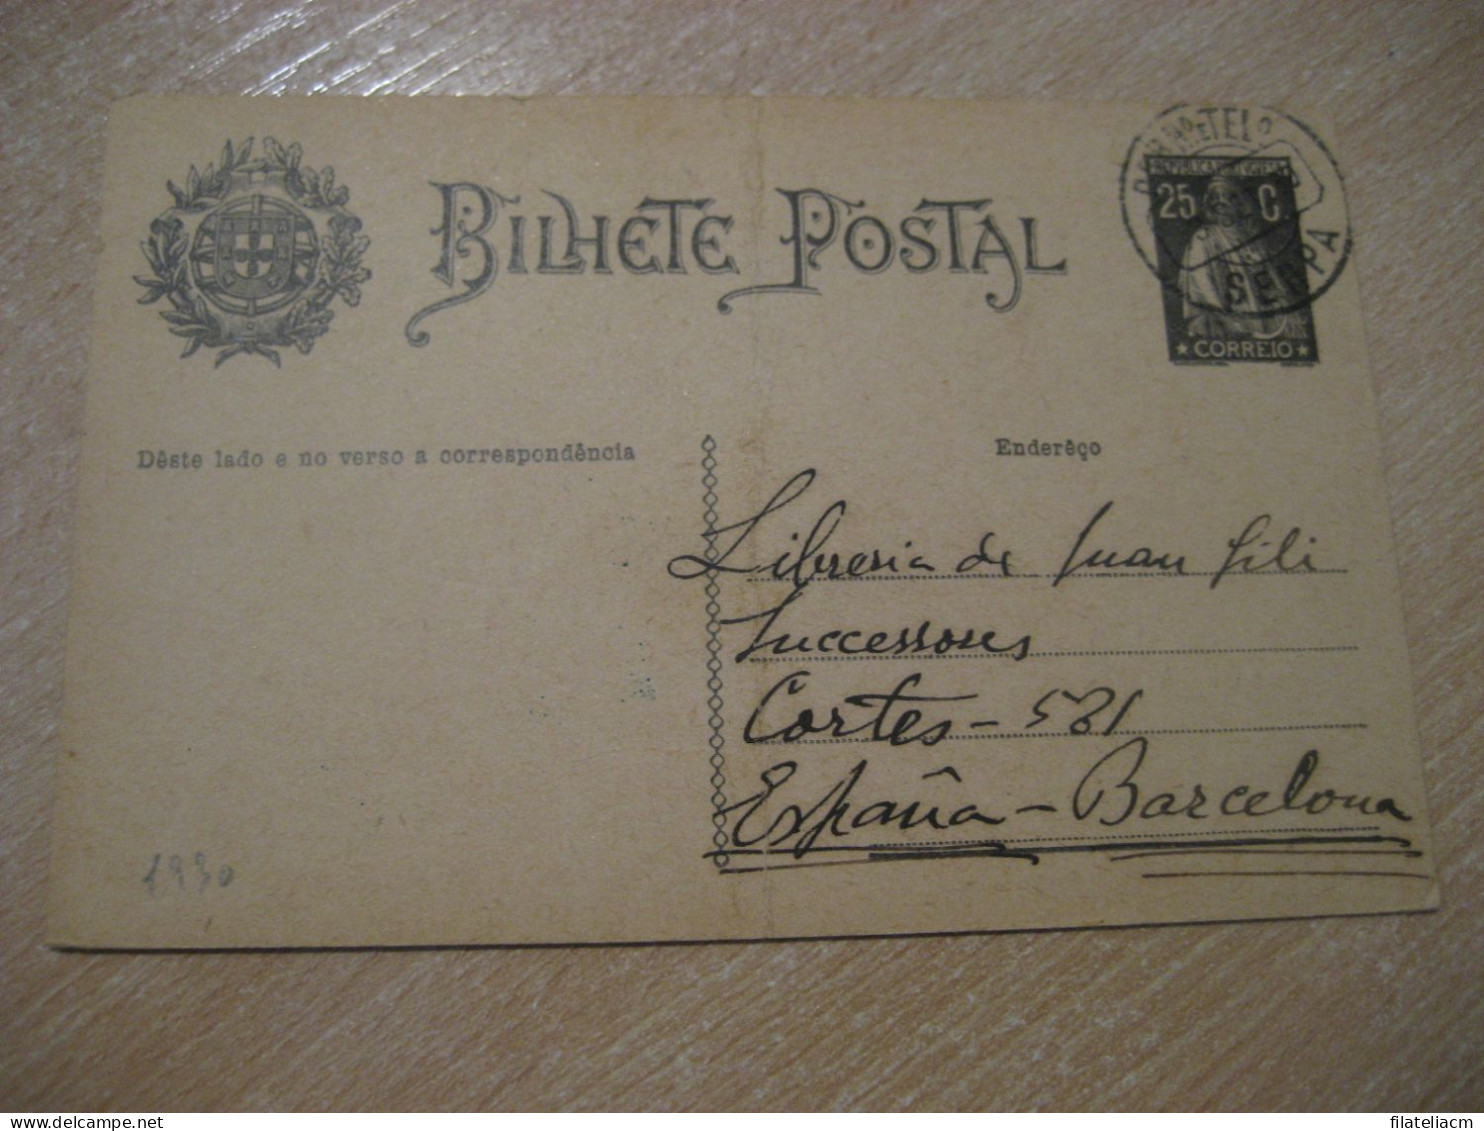 SERPA 1930 To Barcelona Spain Cancel Bilhete Postal Stationery Card PORTUGAL - Covers & Documents